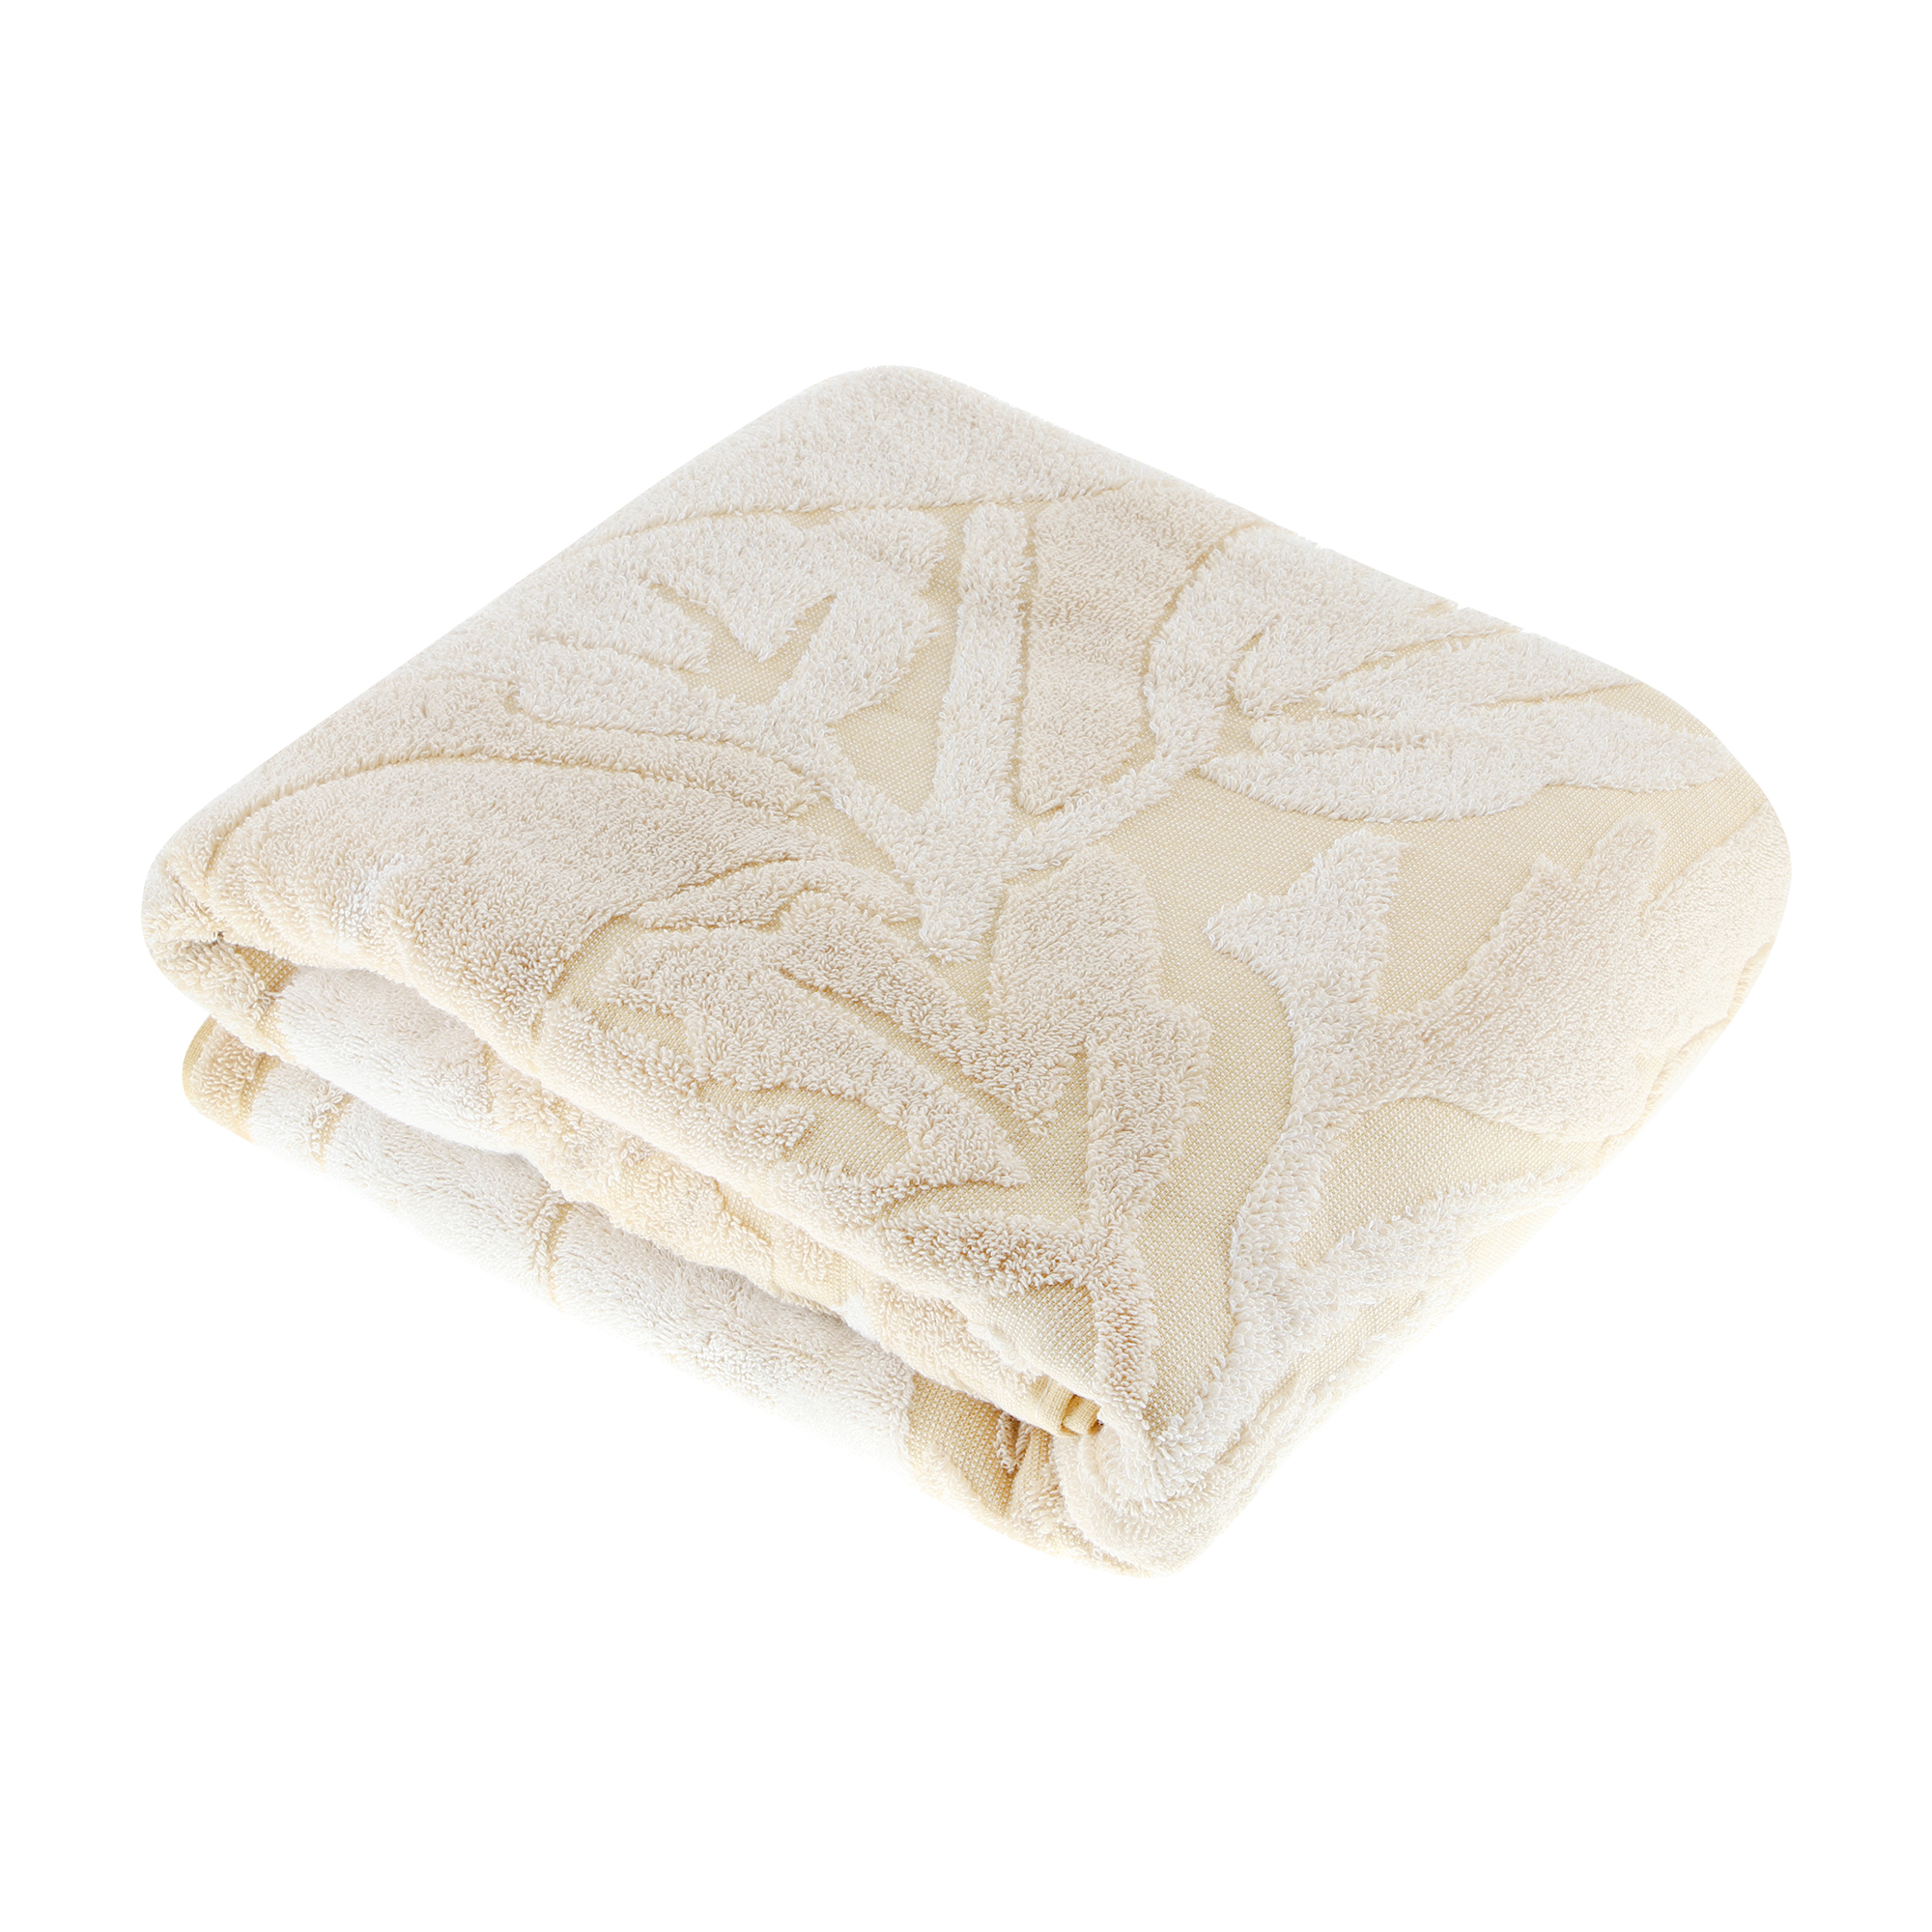 Полотенце махровое Cleanelly Форэста 100х150 бело-горчичное полотенце махровое cleanelly пиоппо 100х150 см